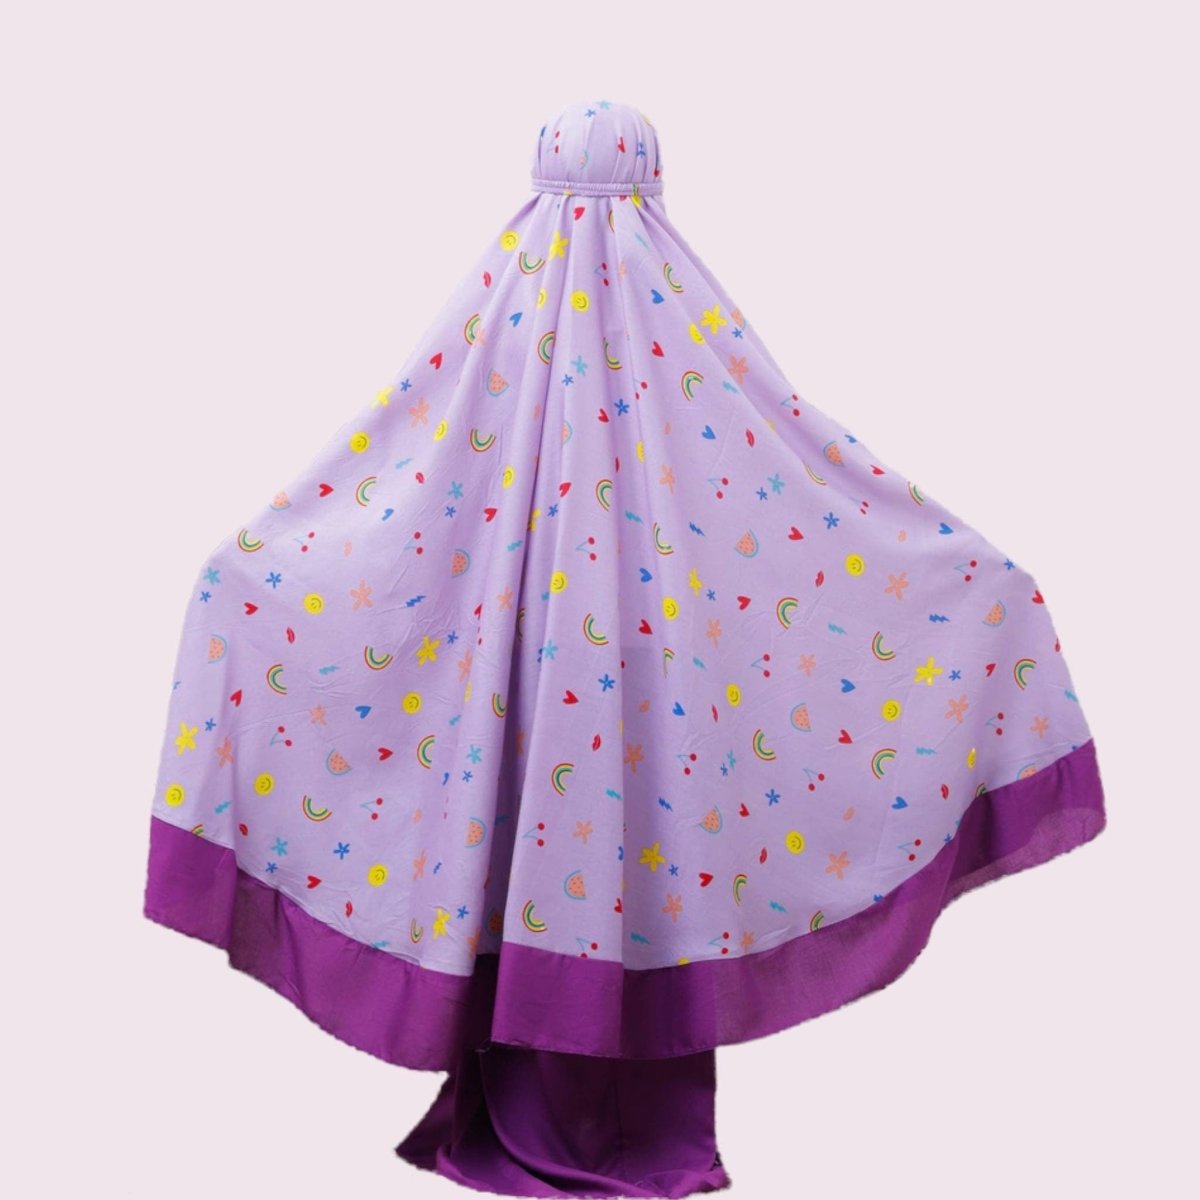 Abaya for Women Modest Muslim Dress - Zhaviah